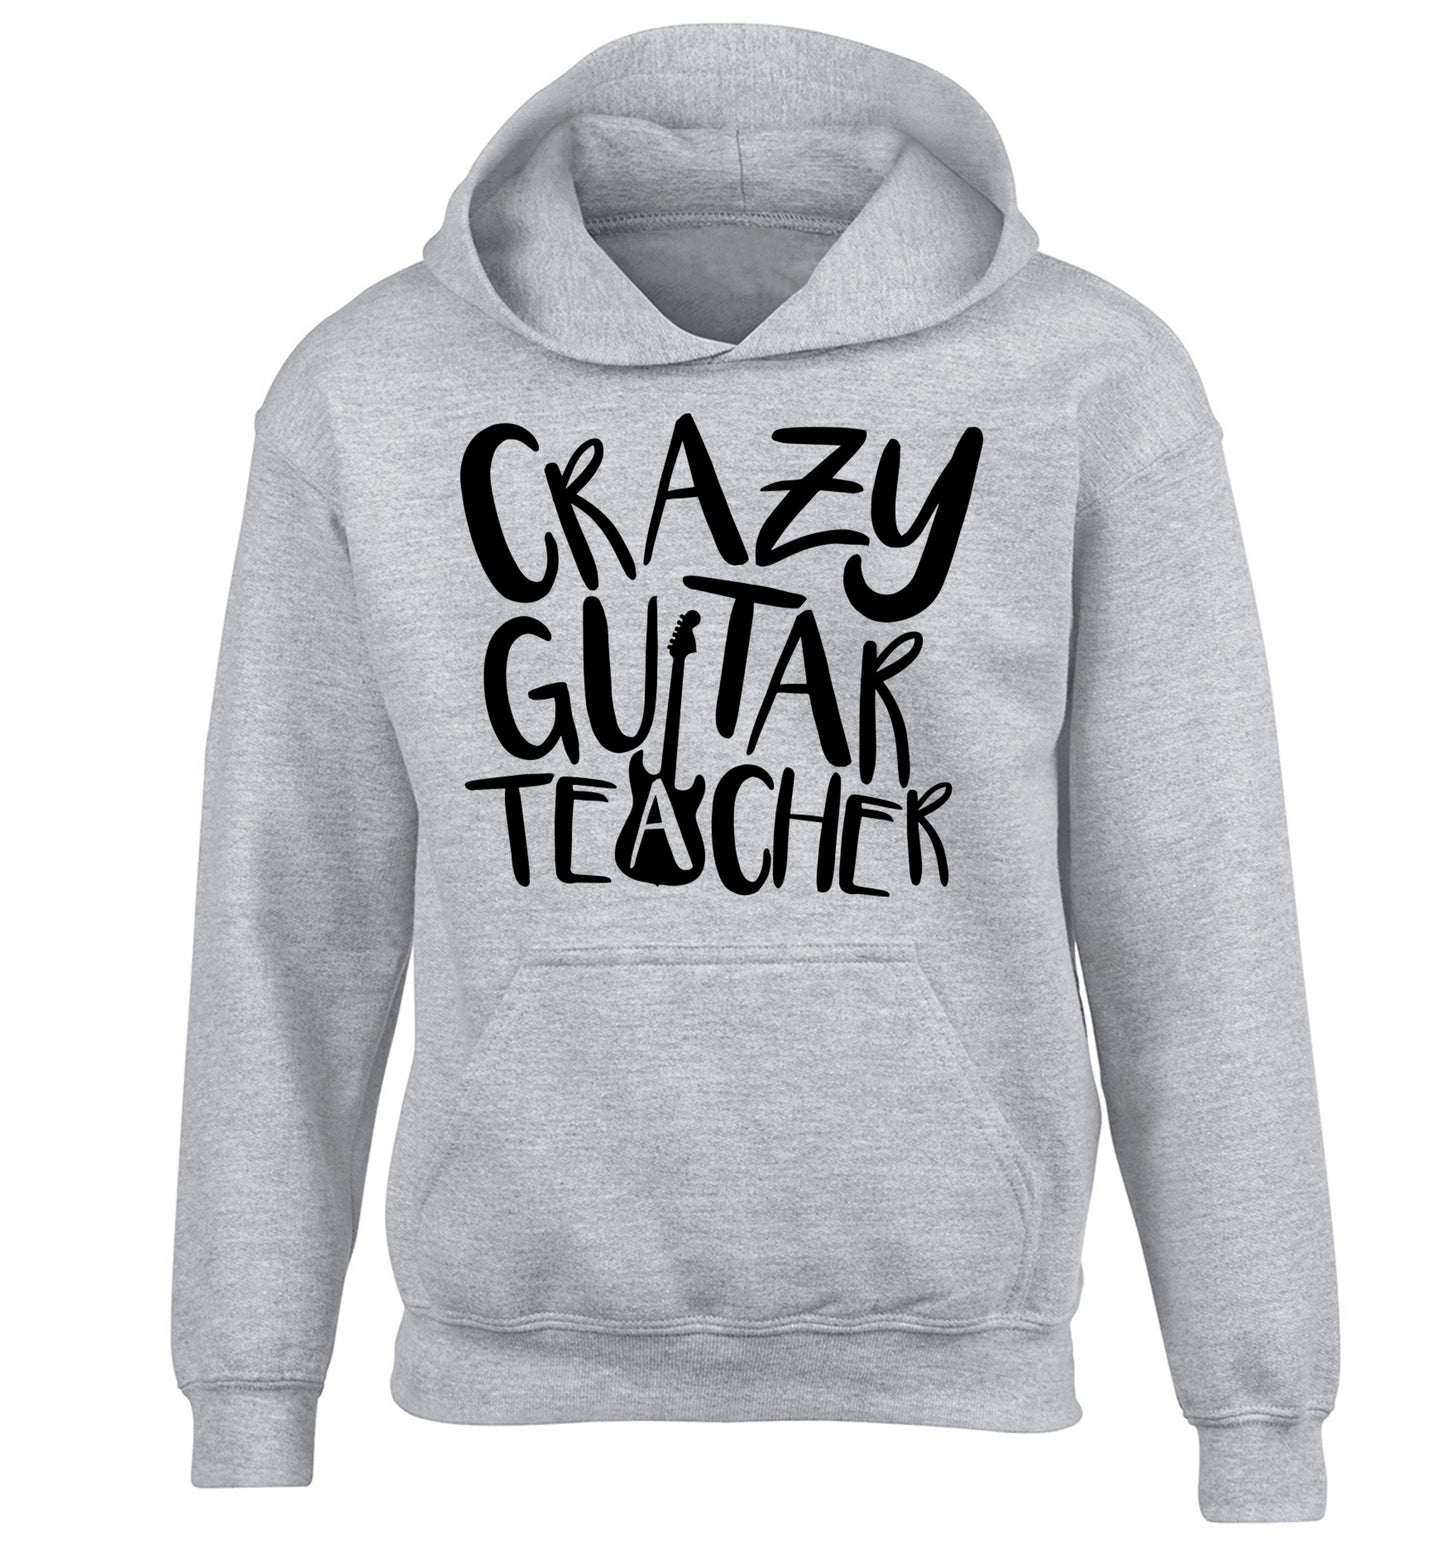 Crazy guitar teacher children's grey hoodie 12-13 Years